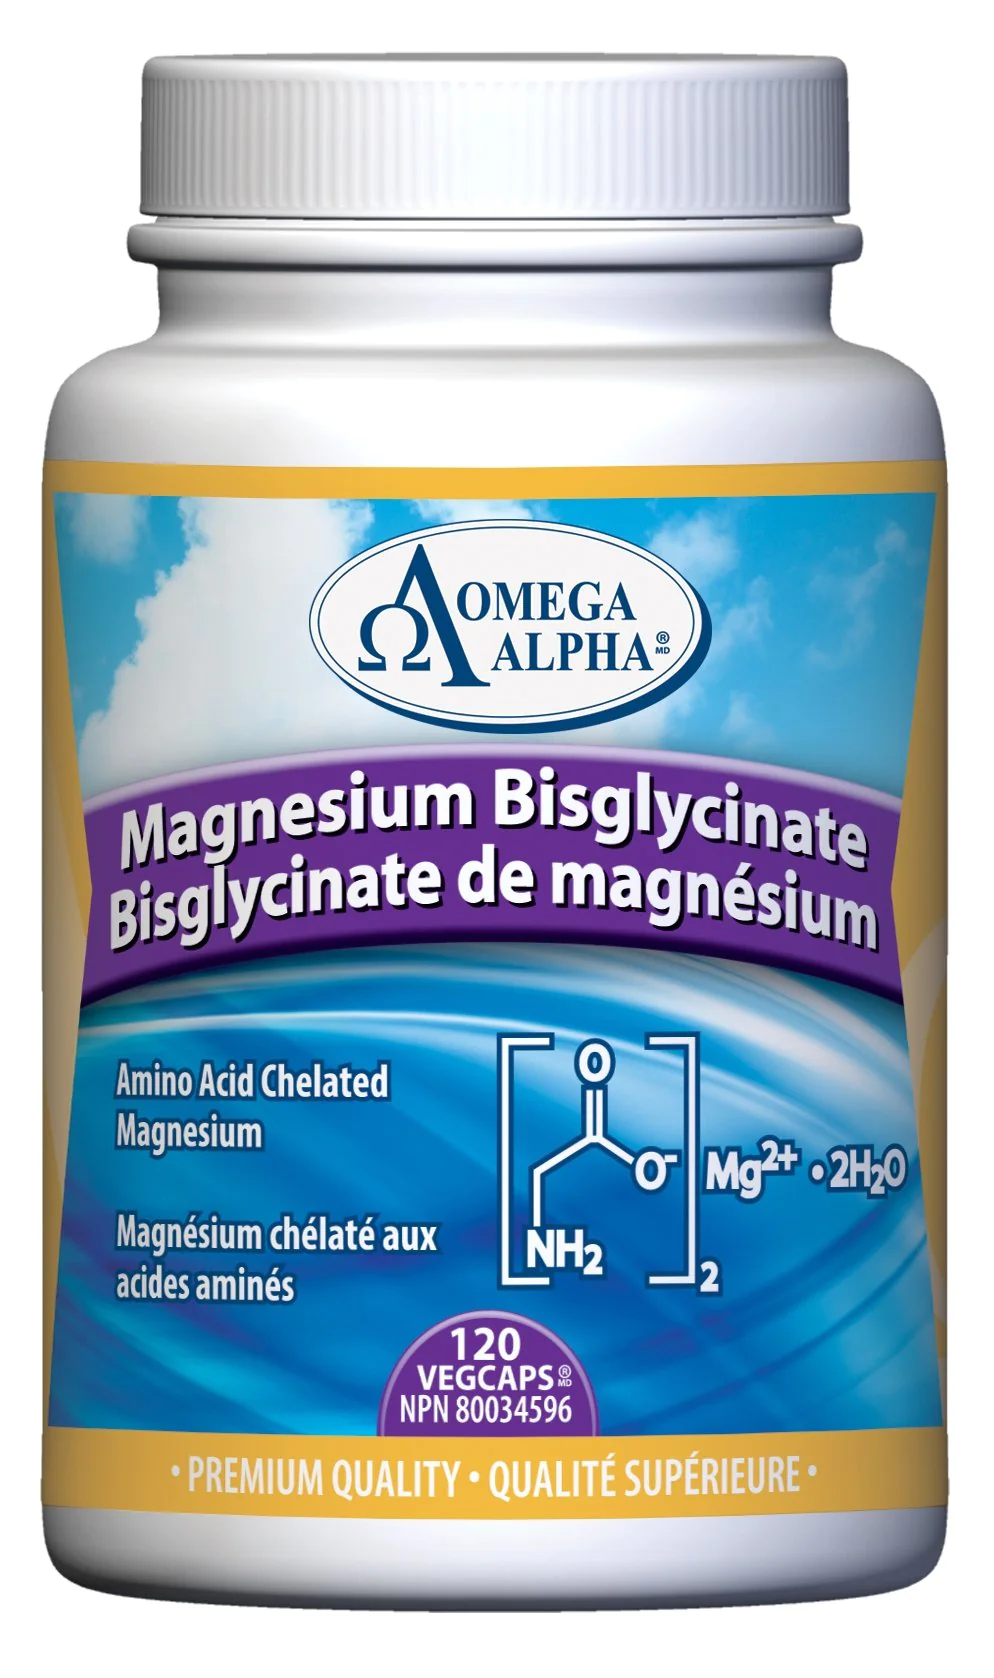 Omega Alpha Magnesium Bisglycinate 120 VCAPS